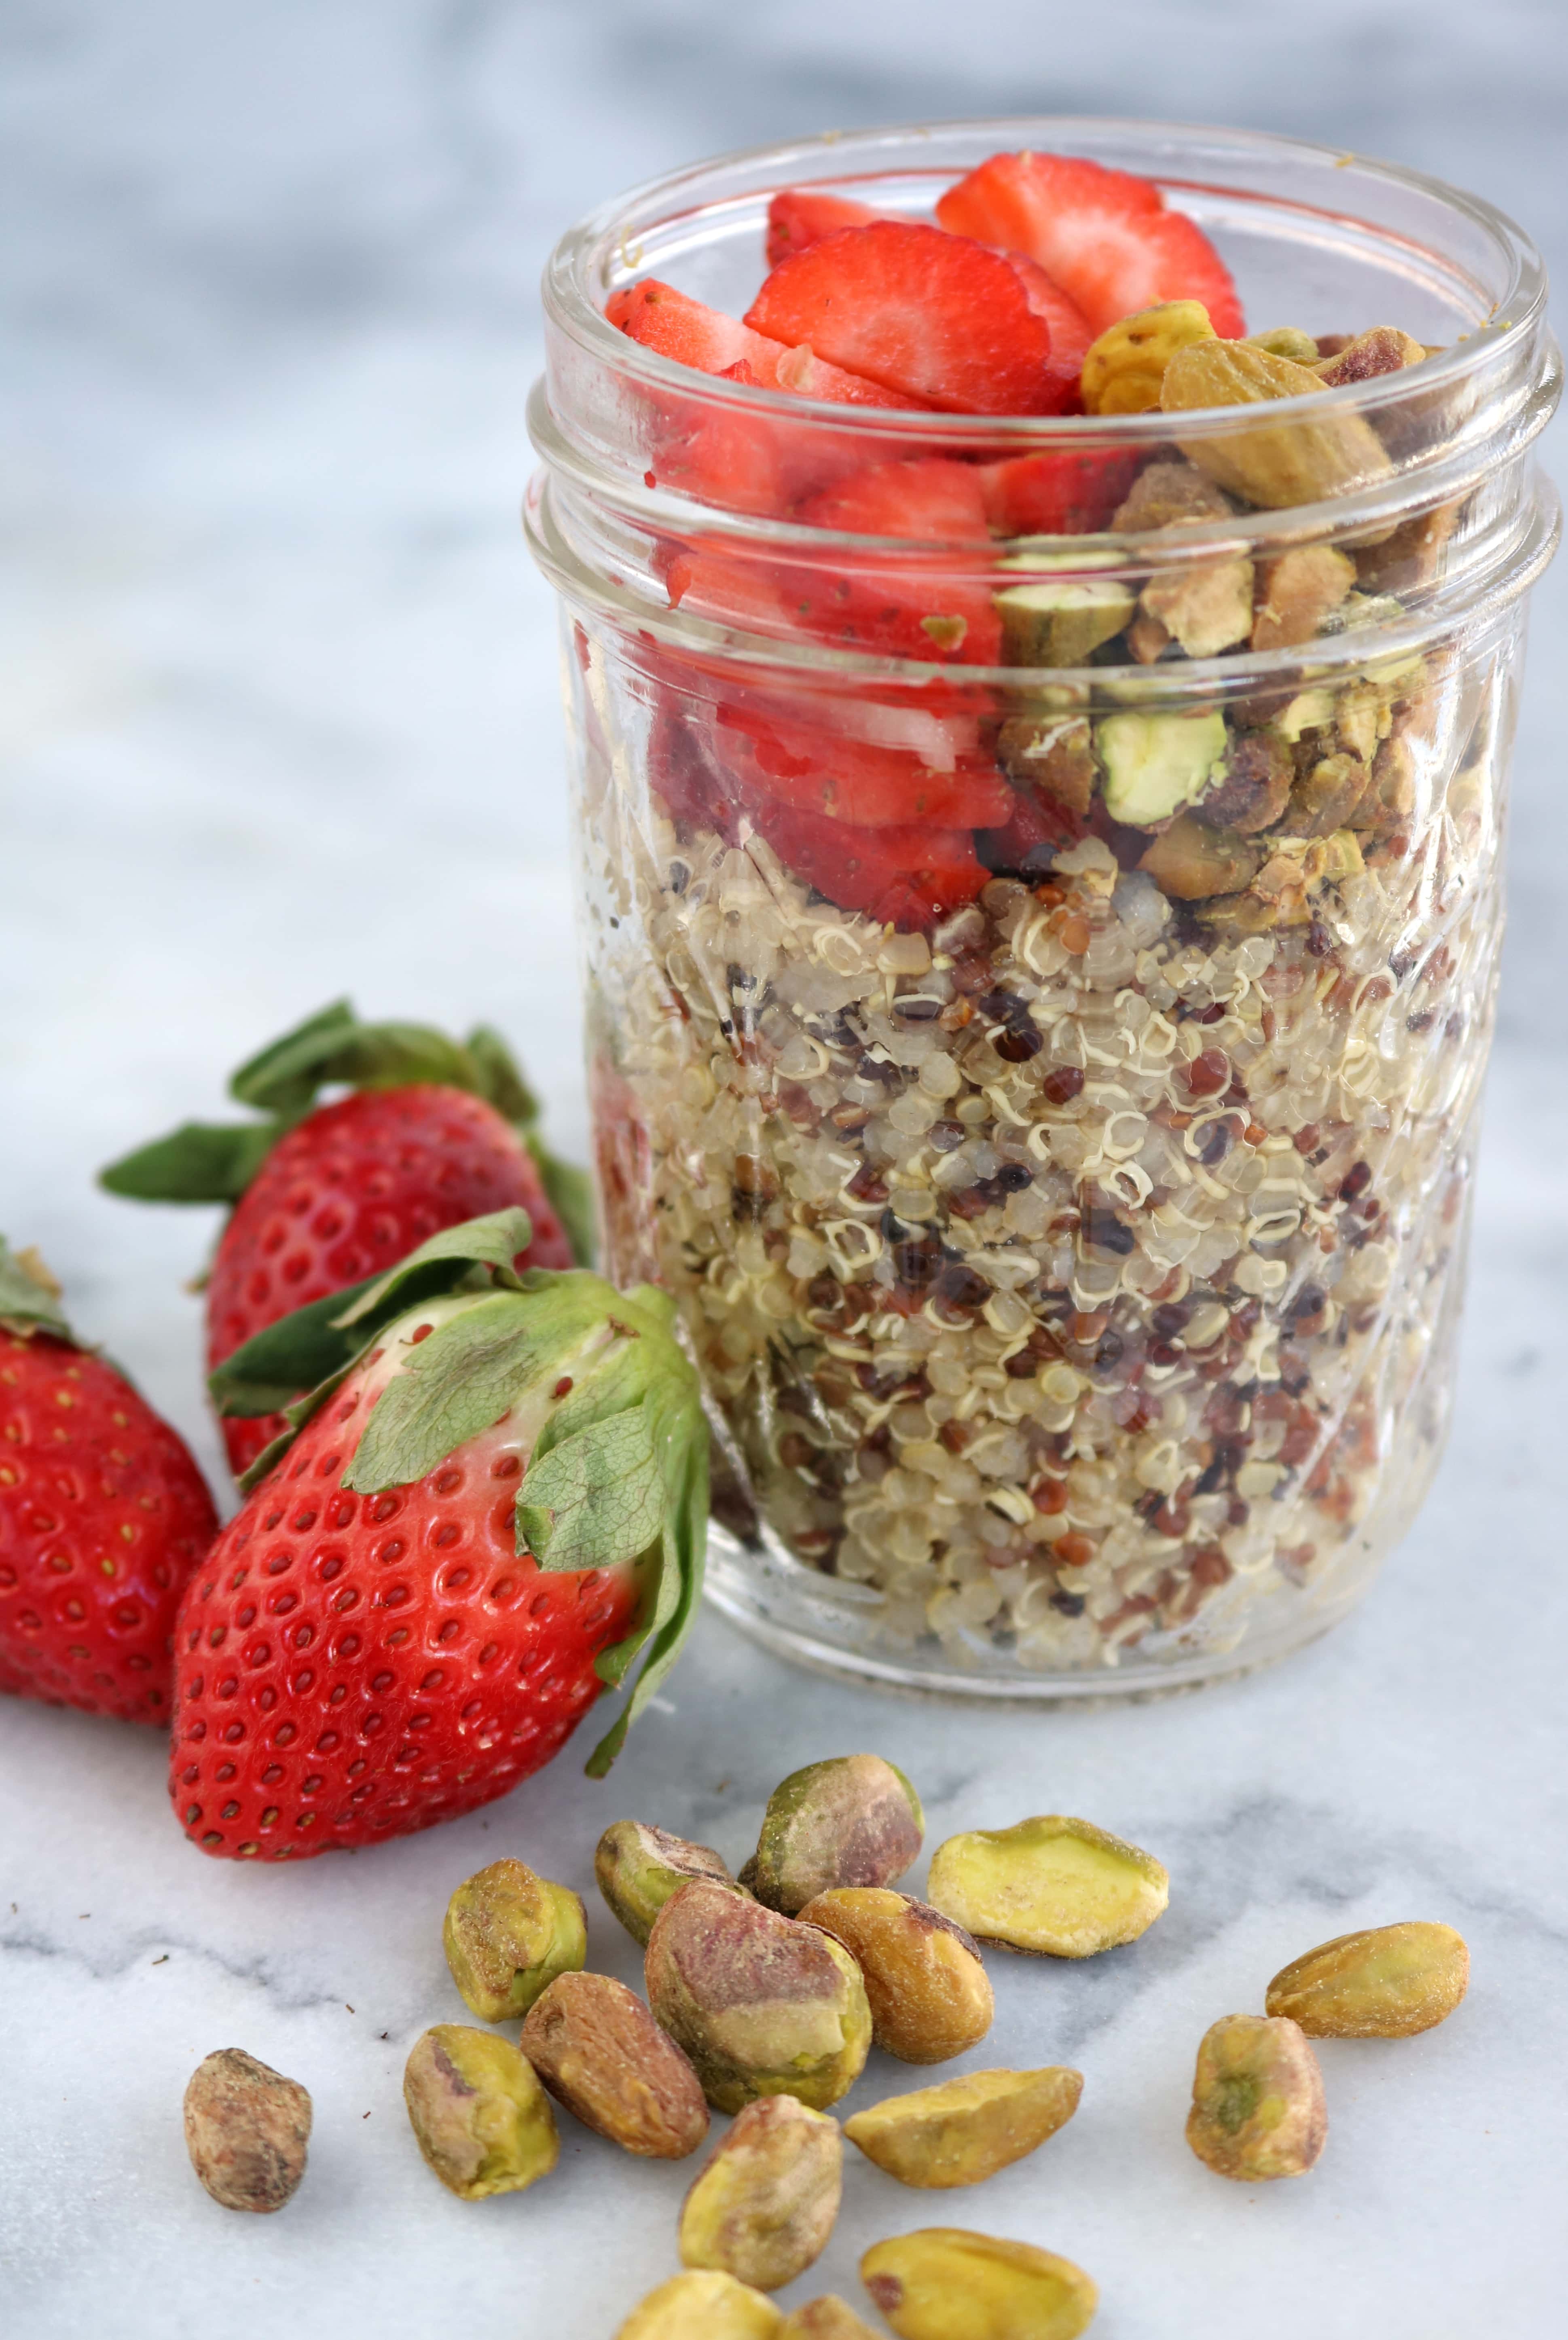 Strawberries and Pistachio Breakfast Quinoa Jars | The Nutrition Adventure 